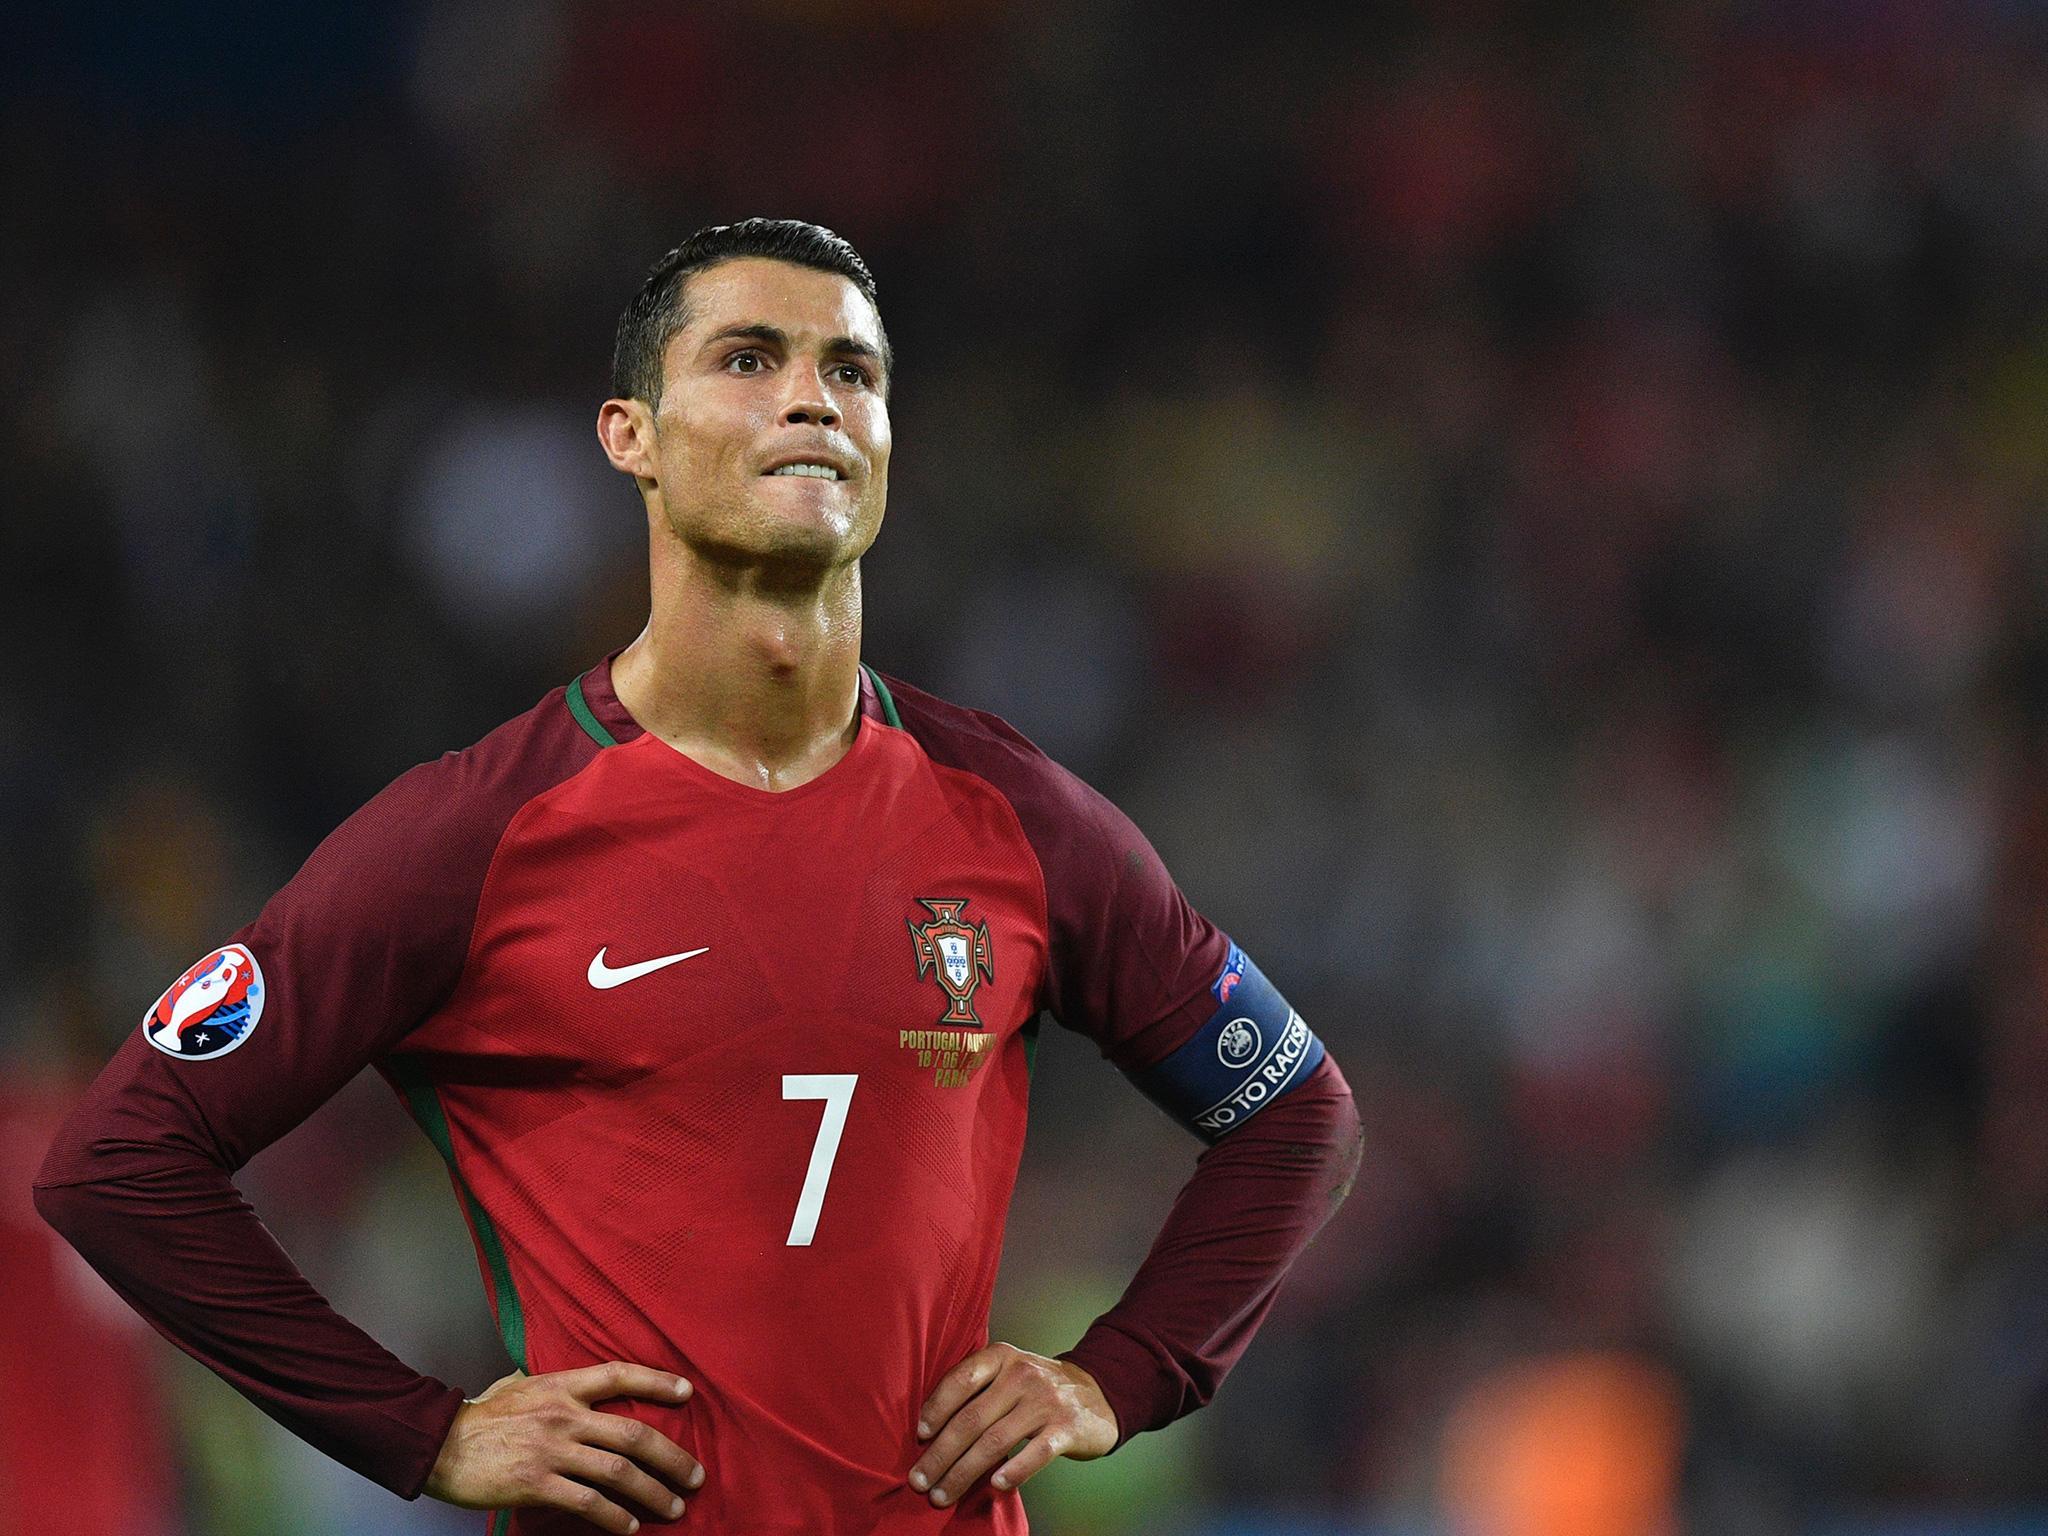 Cristiano Ronaldo has yet to score at Euro 2016